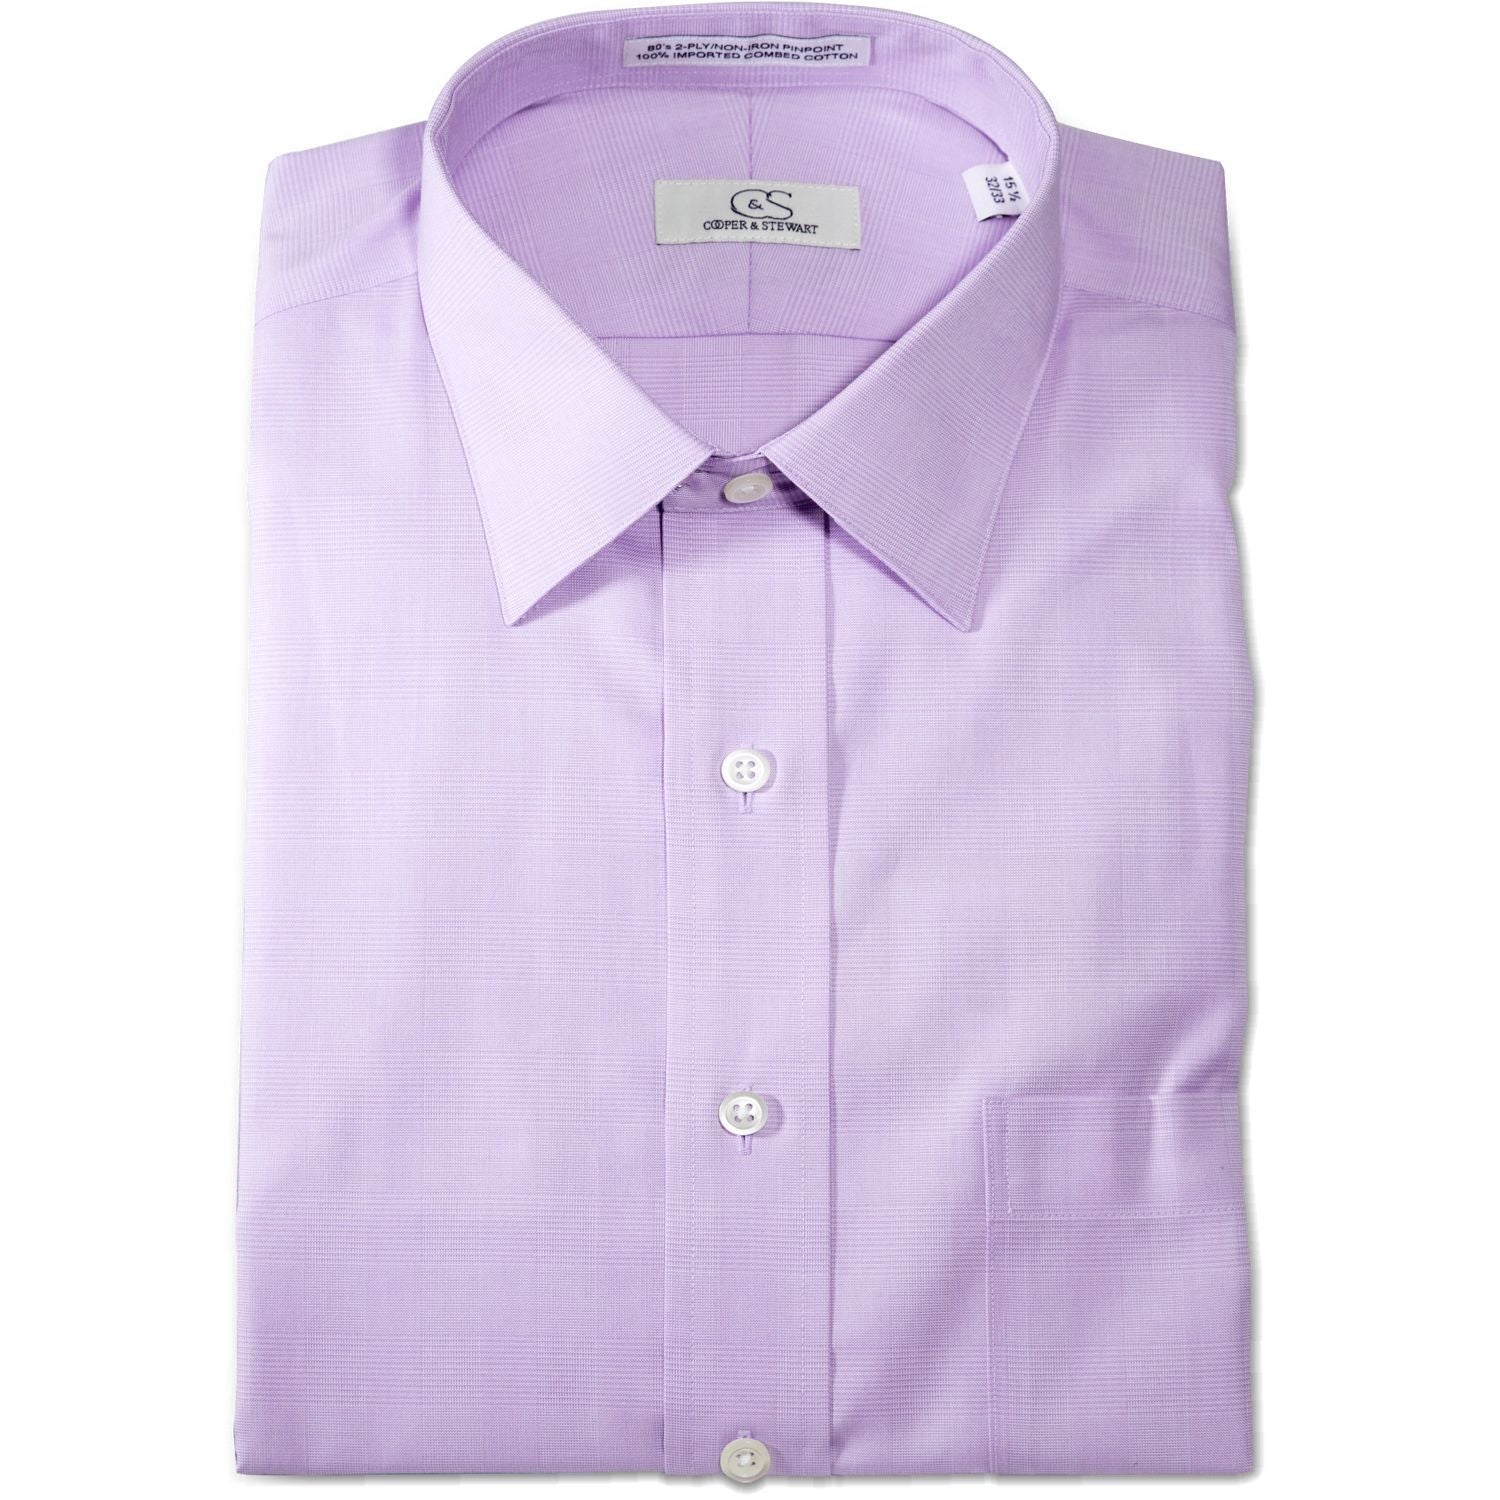 The Belmont - Wrinkle-Free Glen Plaid Cotton Dress Shirt in Lavender by Cooper & Stewart